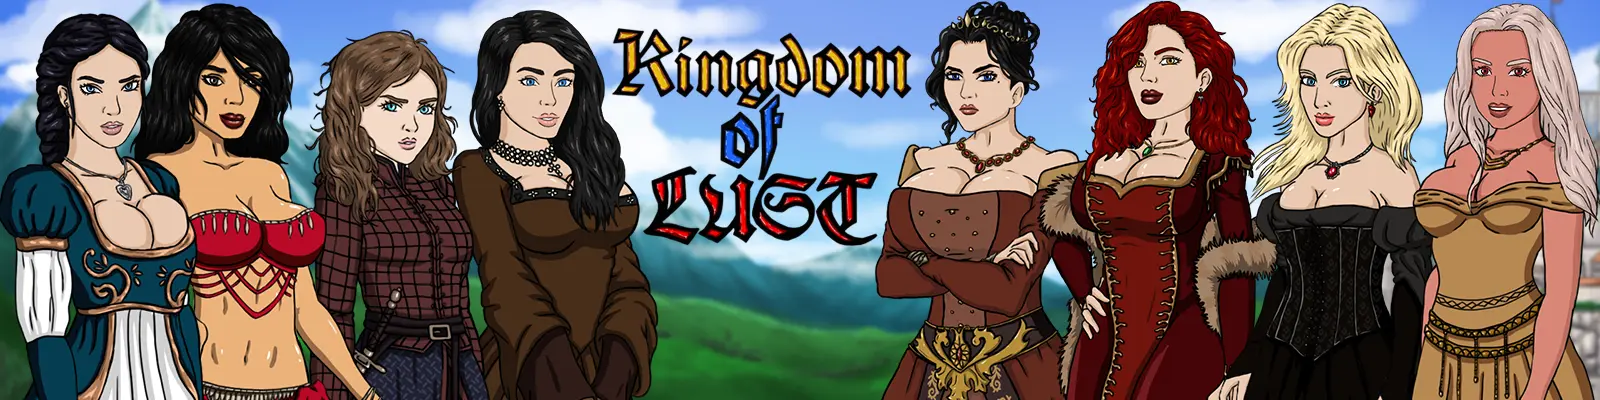 Kingdom of Lust [v0.1.1] main image